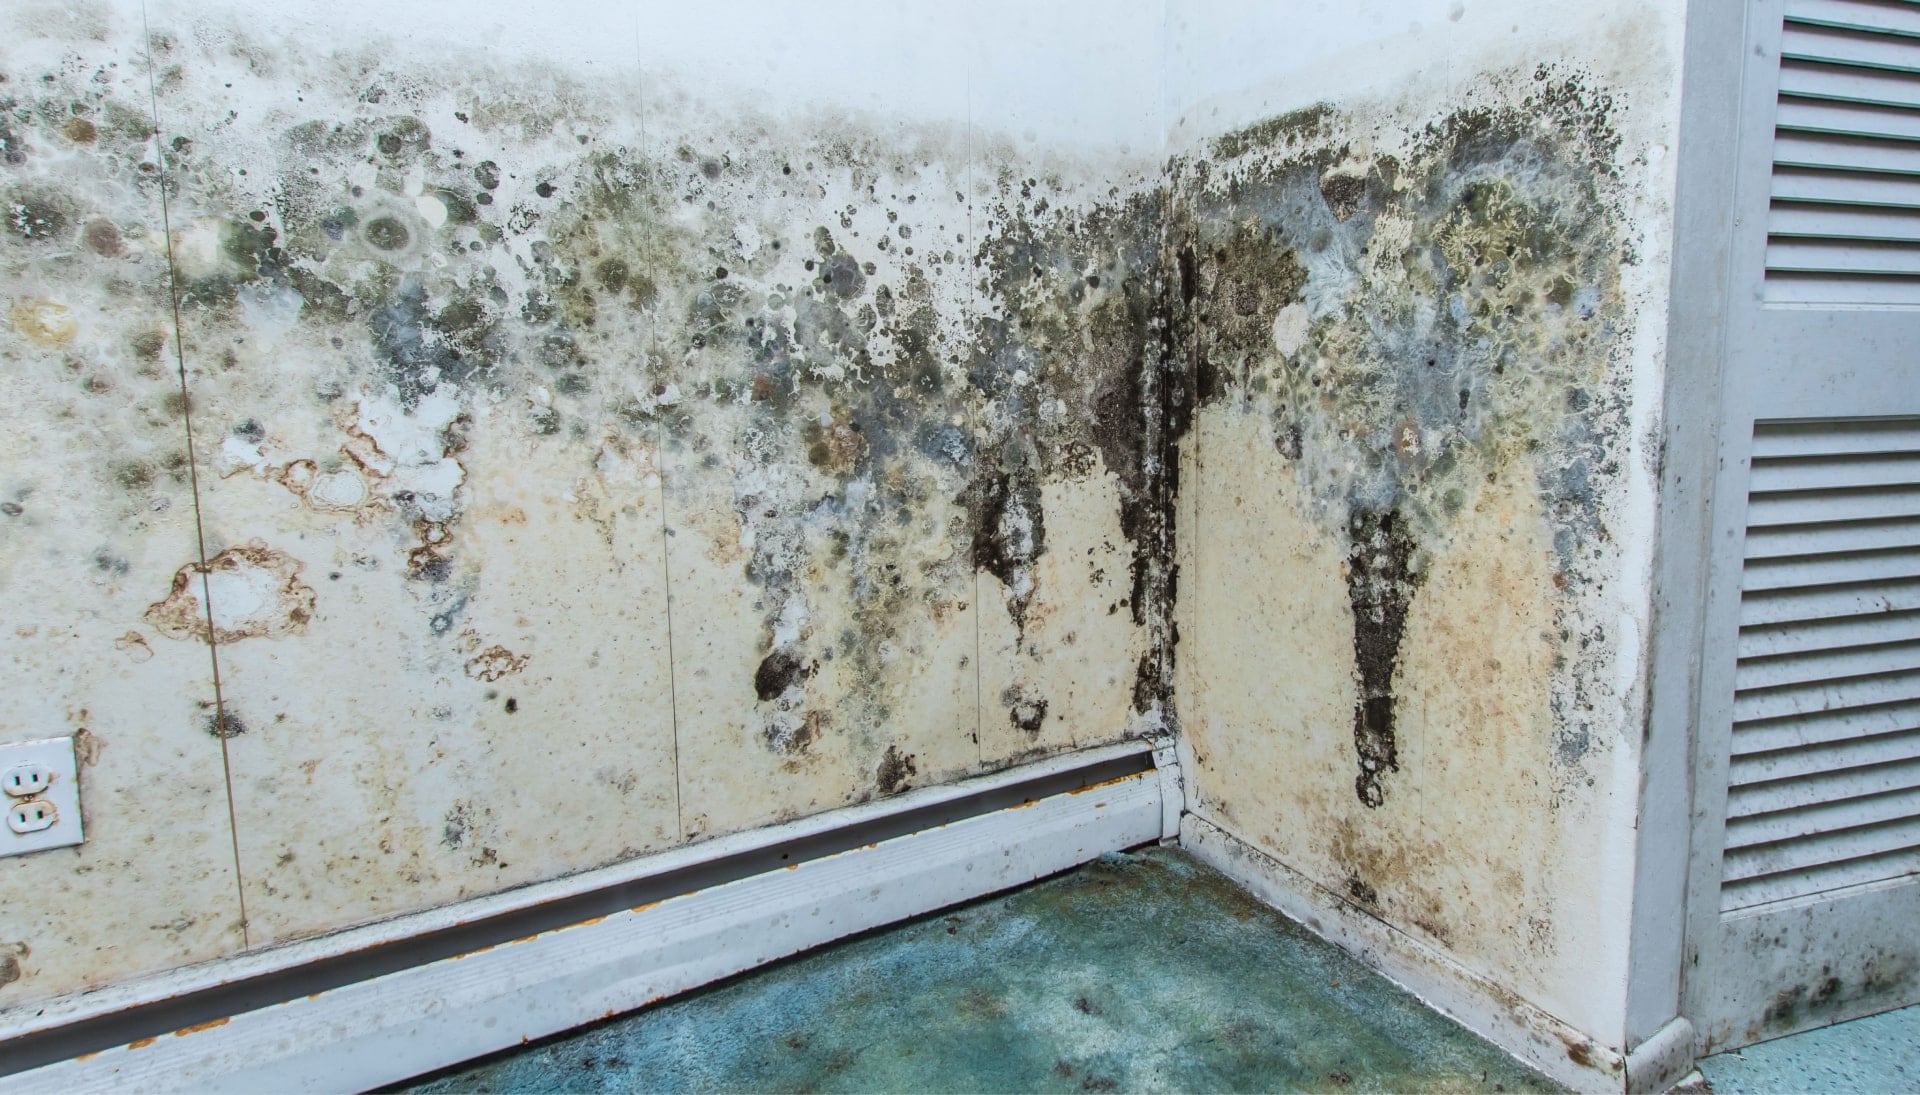 Mold-Damager-Odor-Control in Greensboro